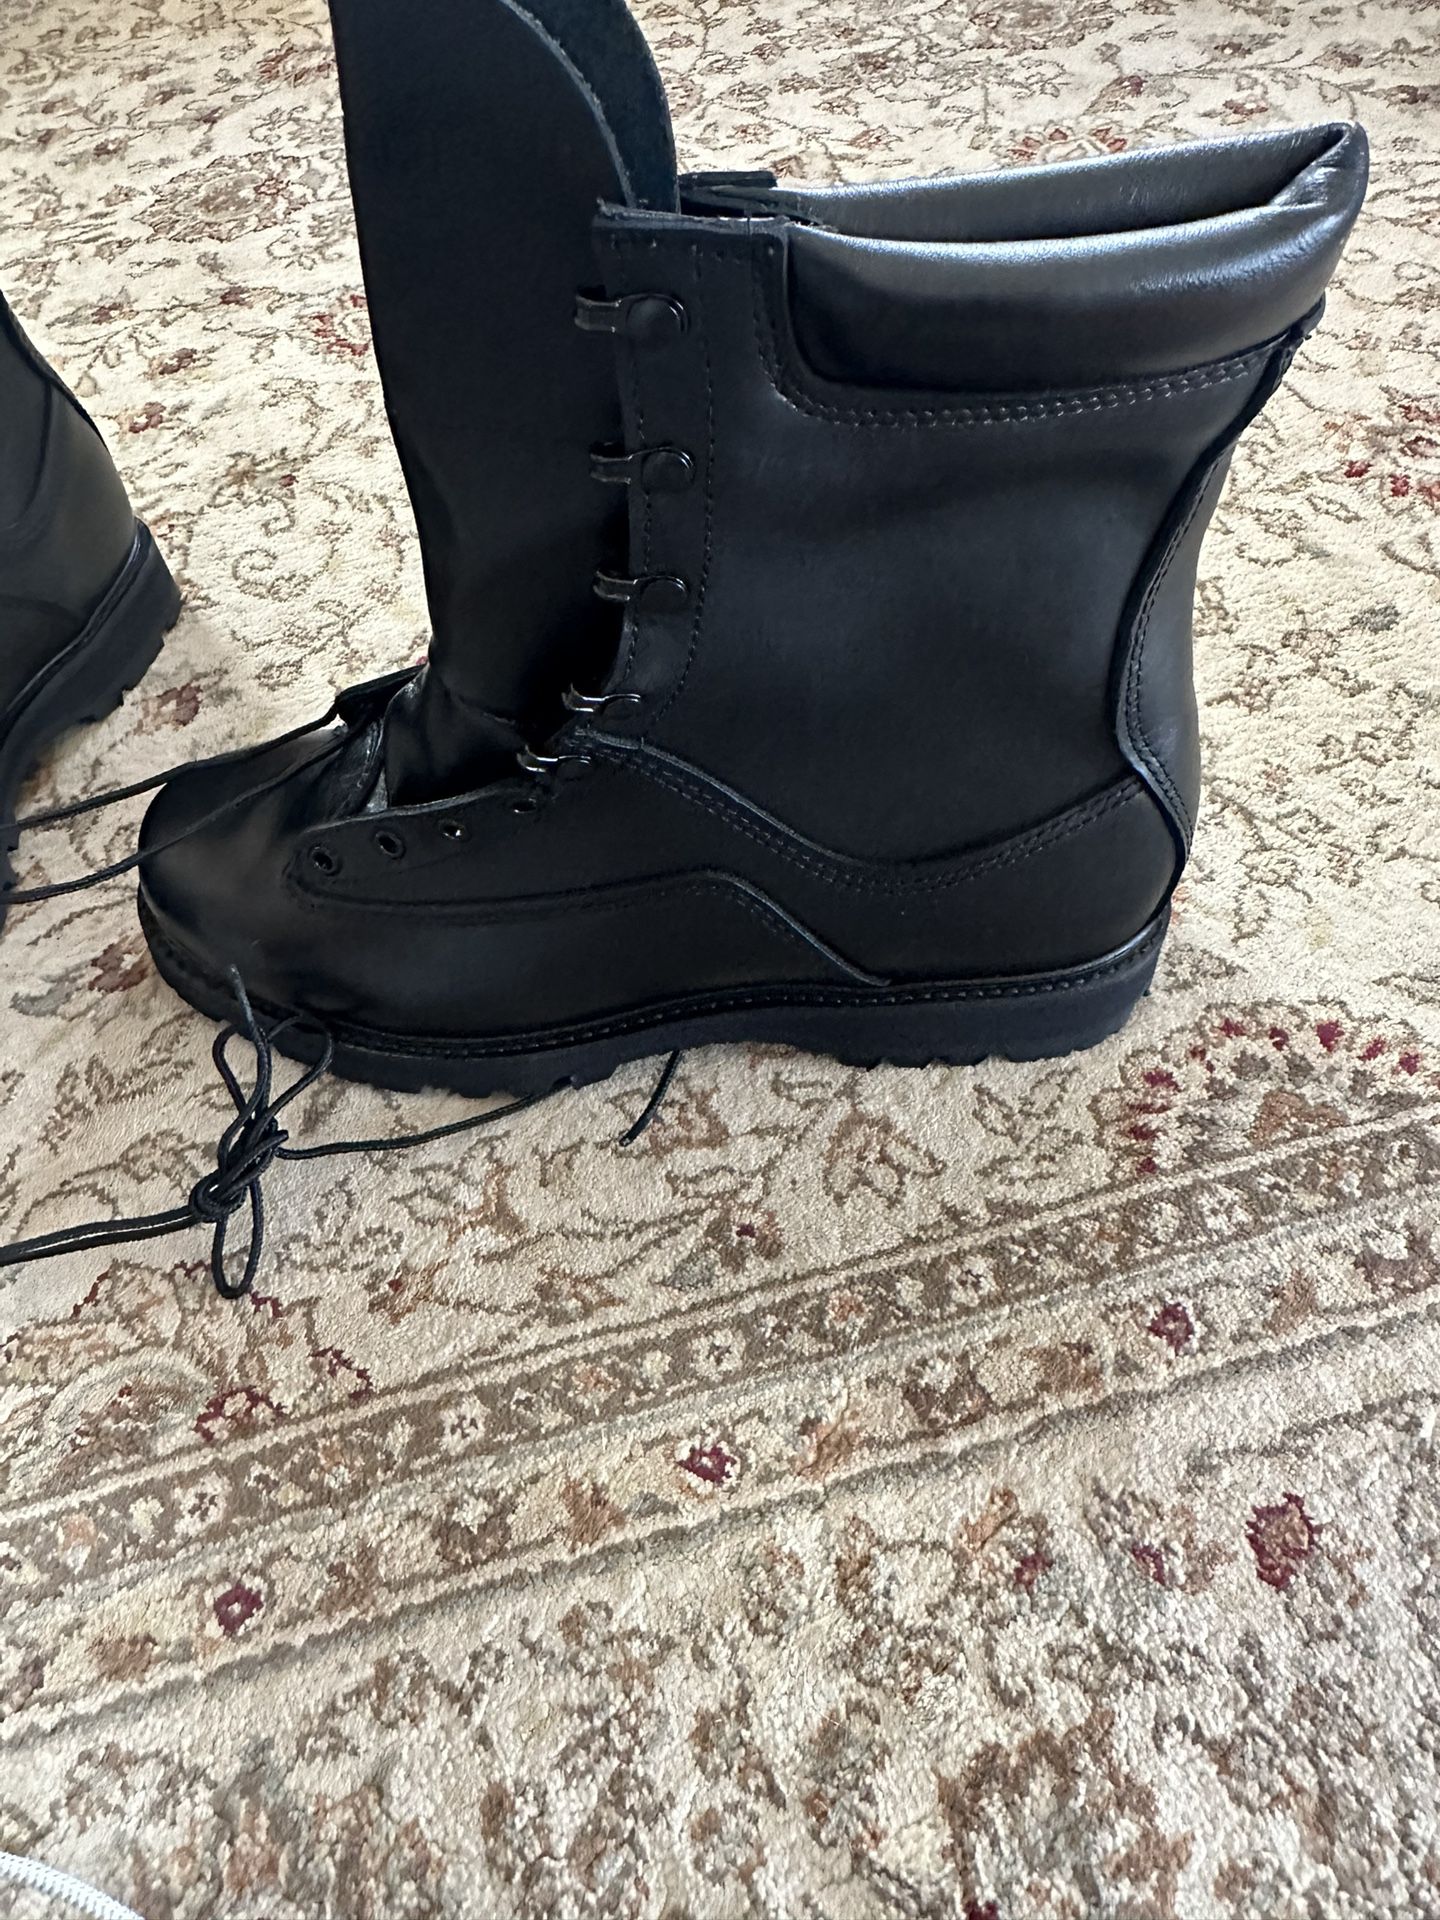 Mattahorn Black Leather Boots Size 11